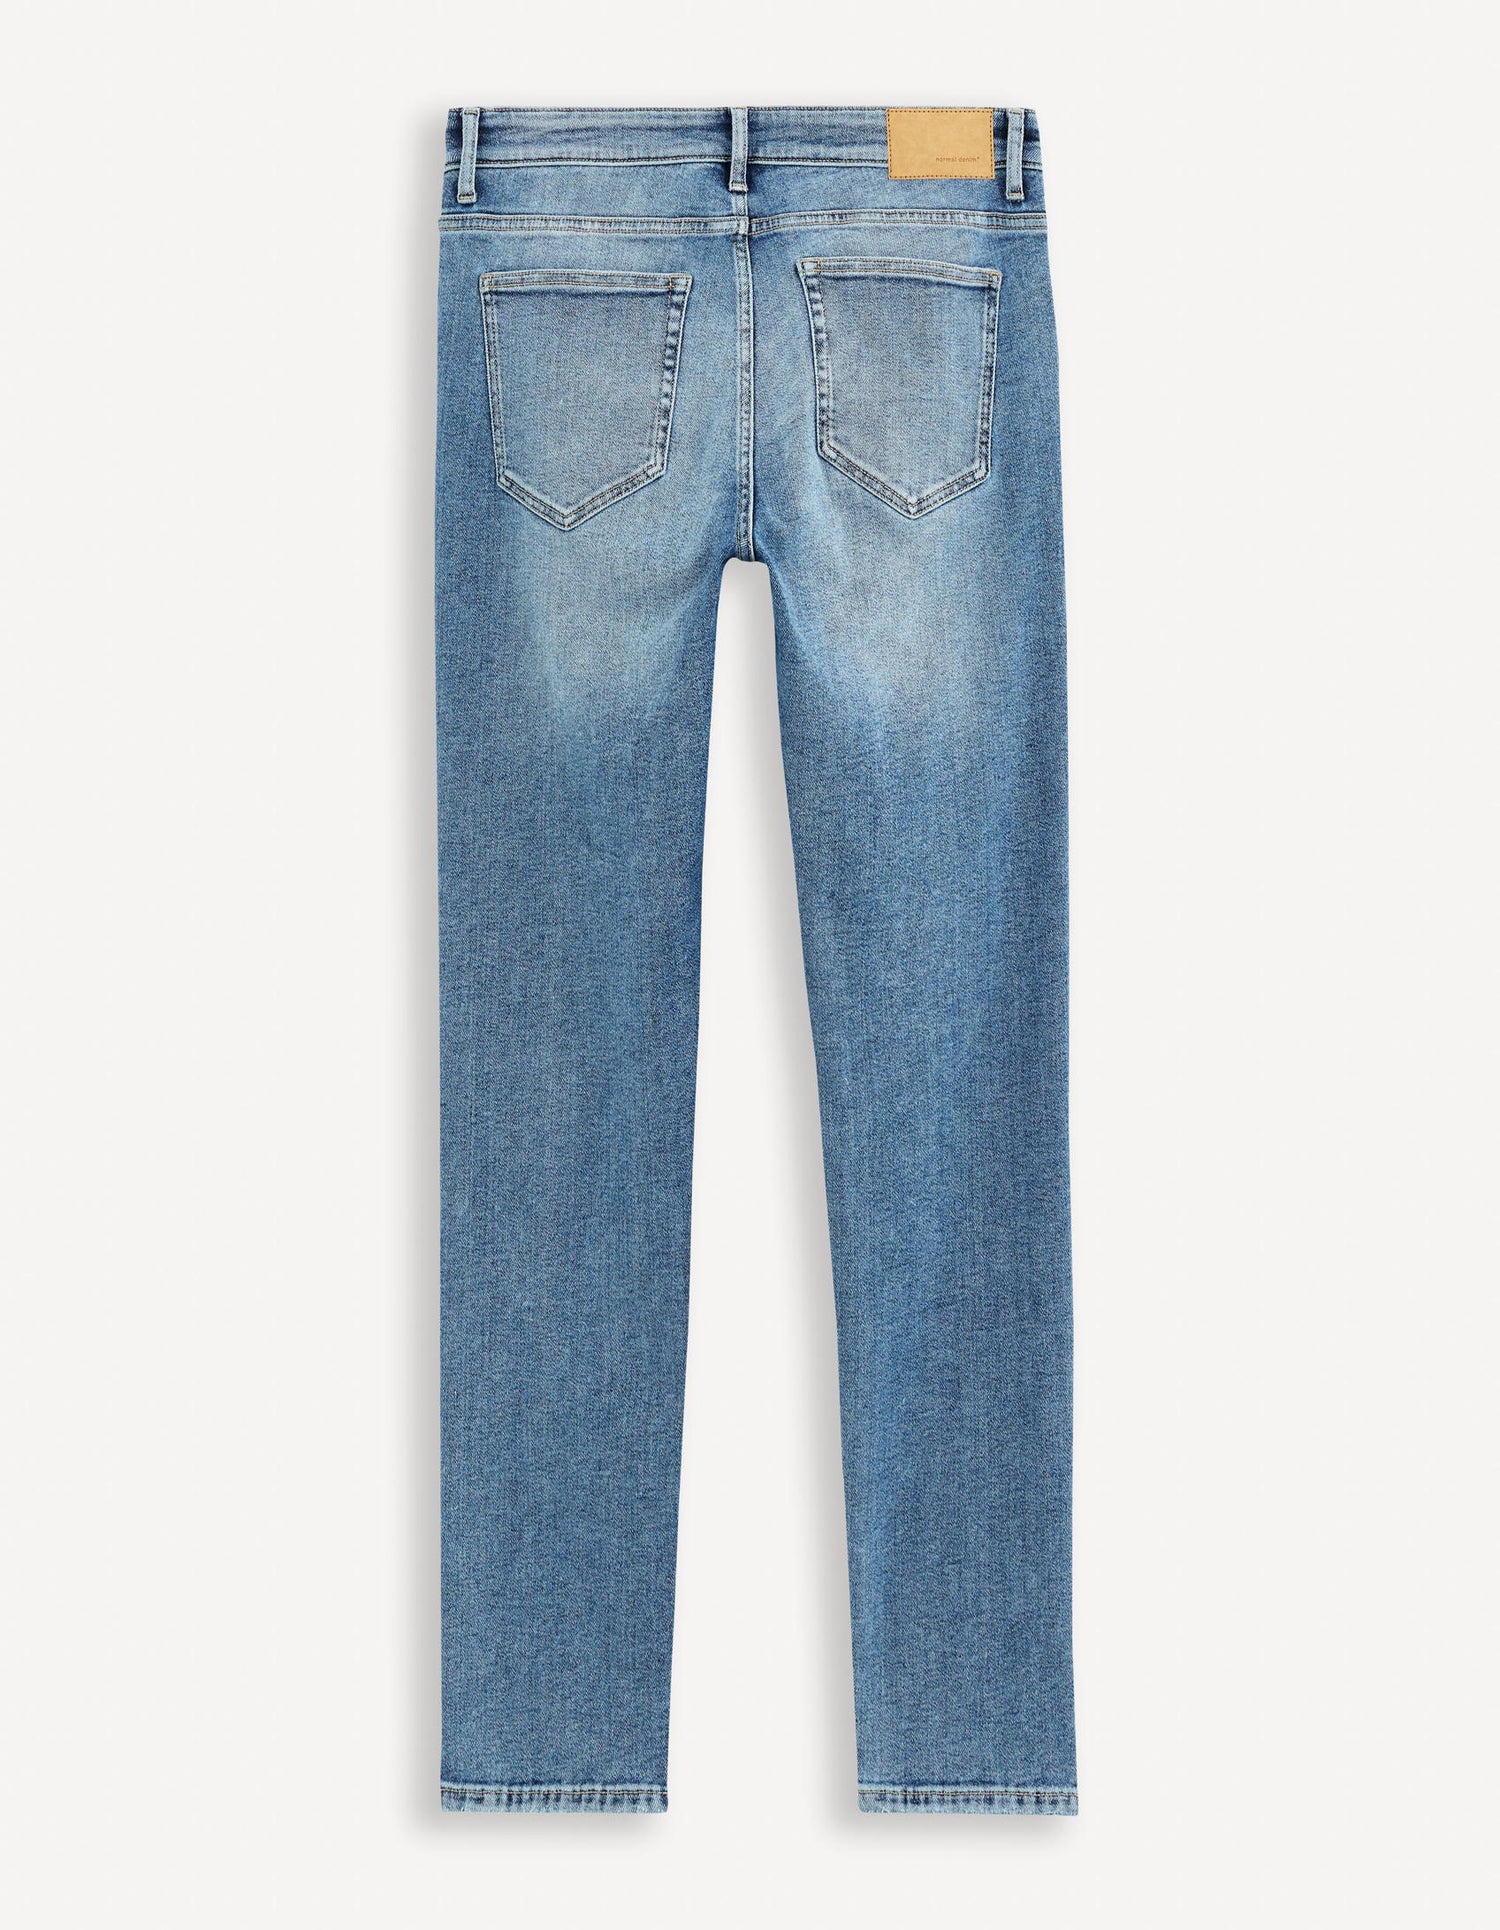 C25 Slim Stretch Jeans 3 Lengths - Blue_DOFINE25_DOUBLE STONE_06